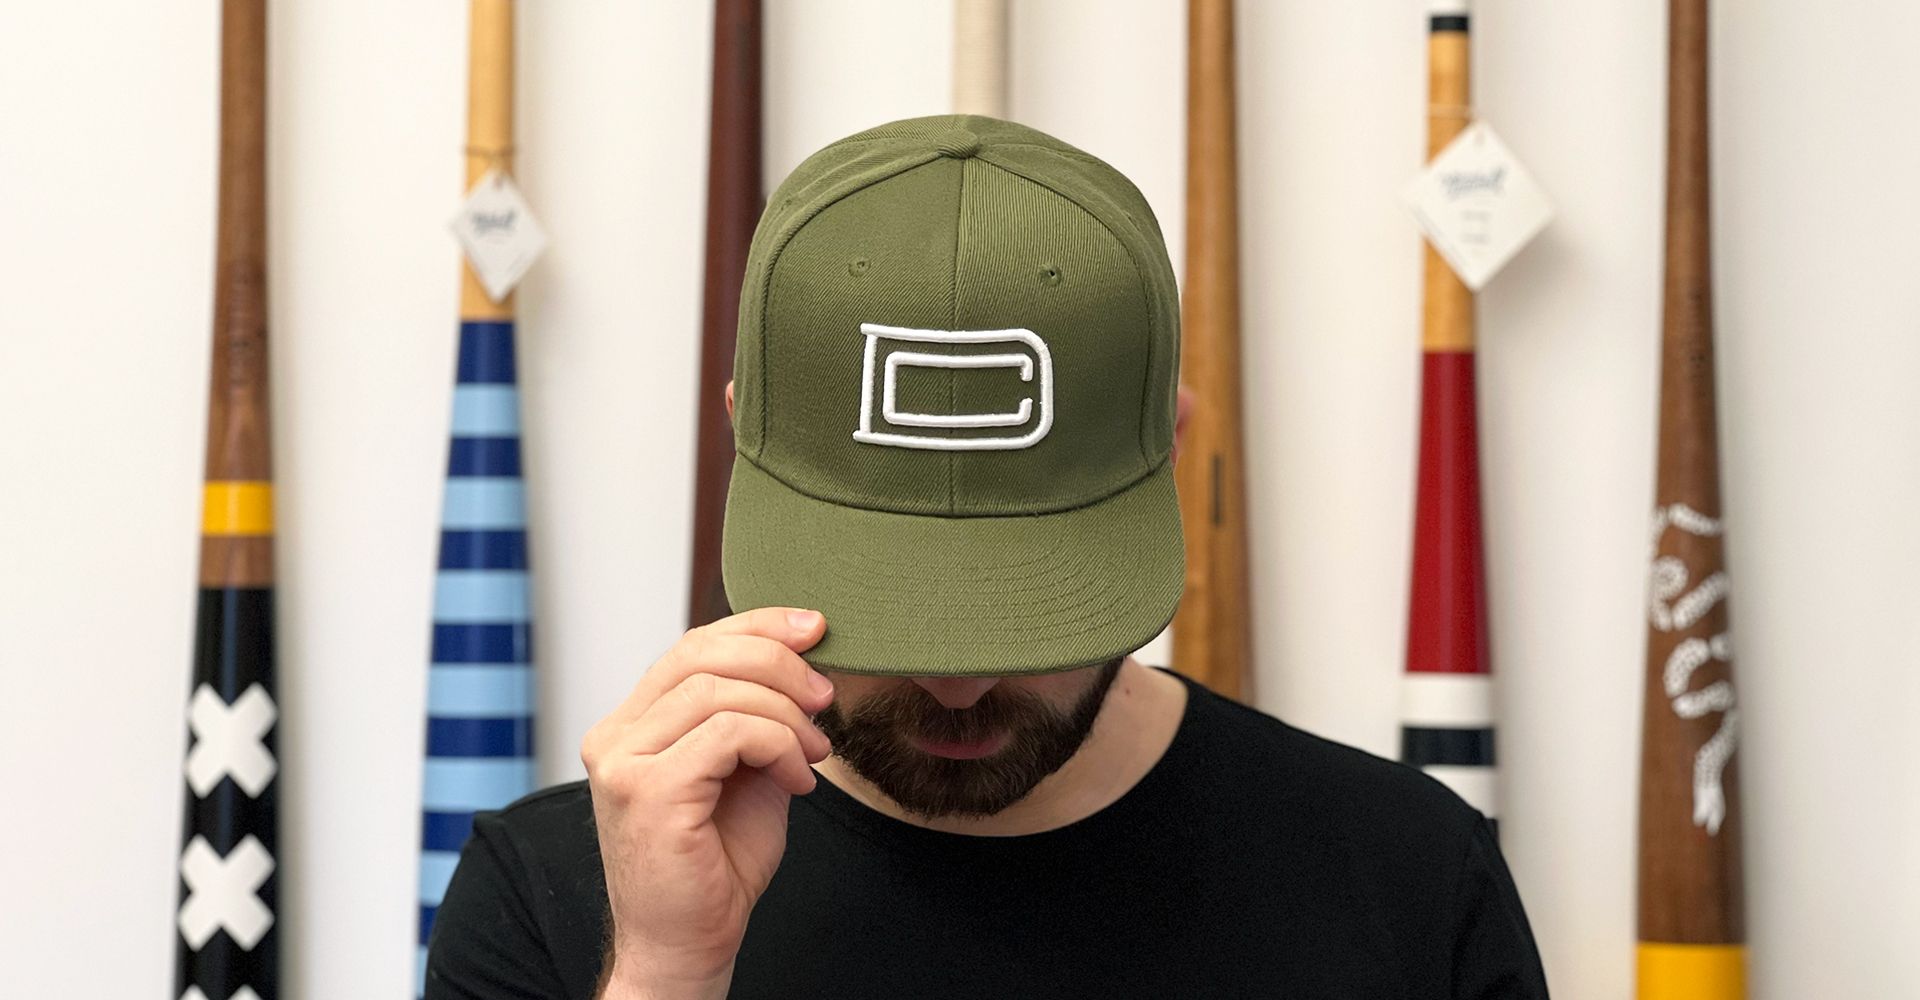 Dan wearing olive green hat with DC monogram